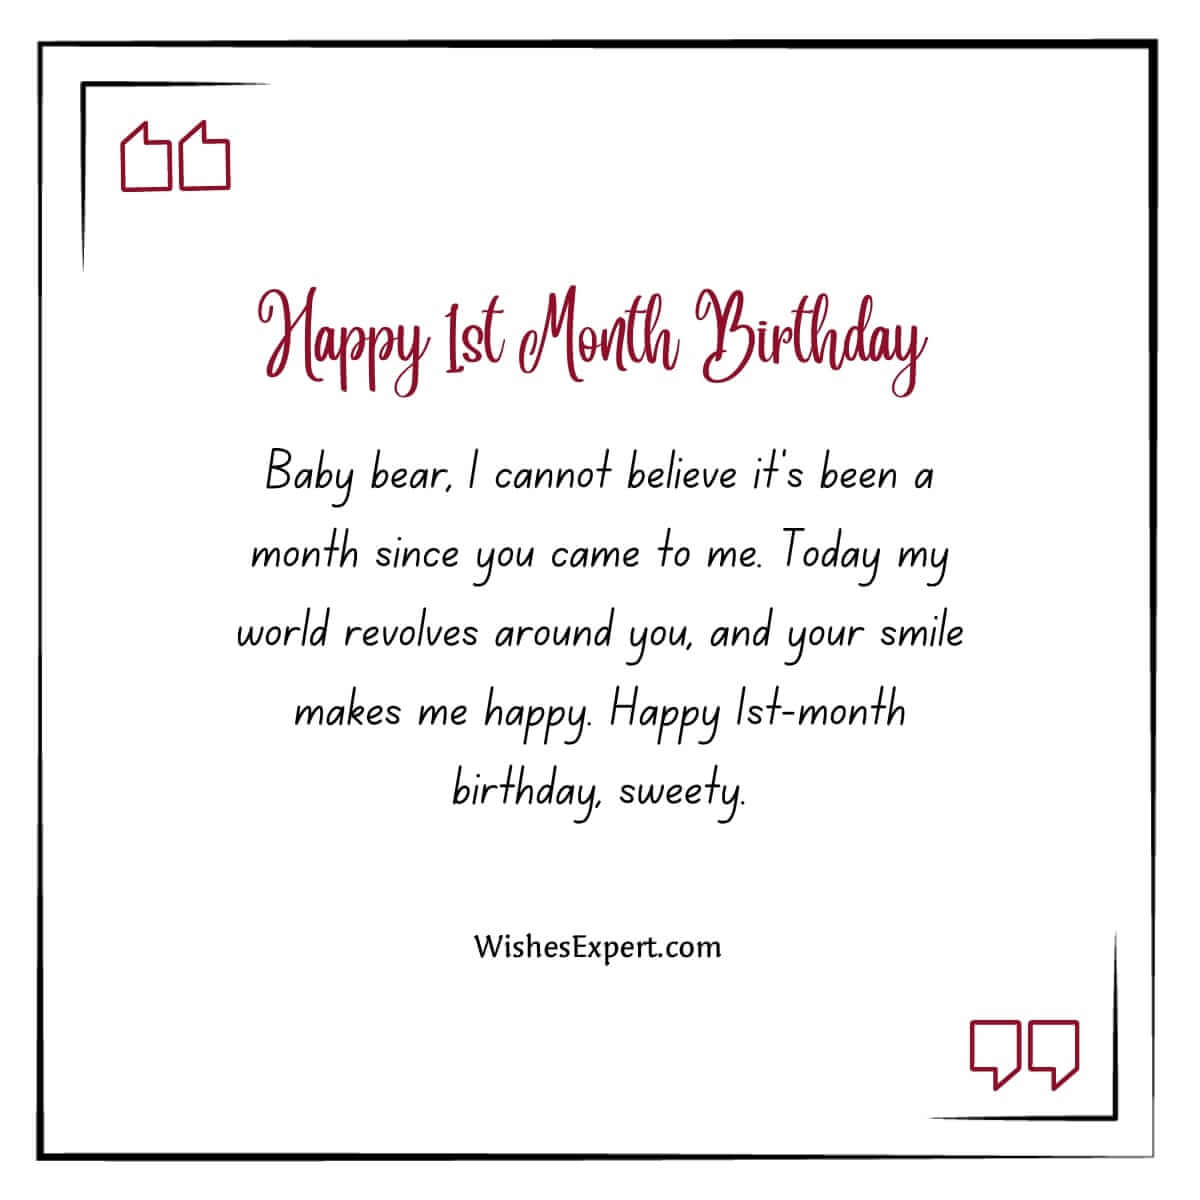 Happy-1st-Month-Birthday-Wishes